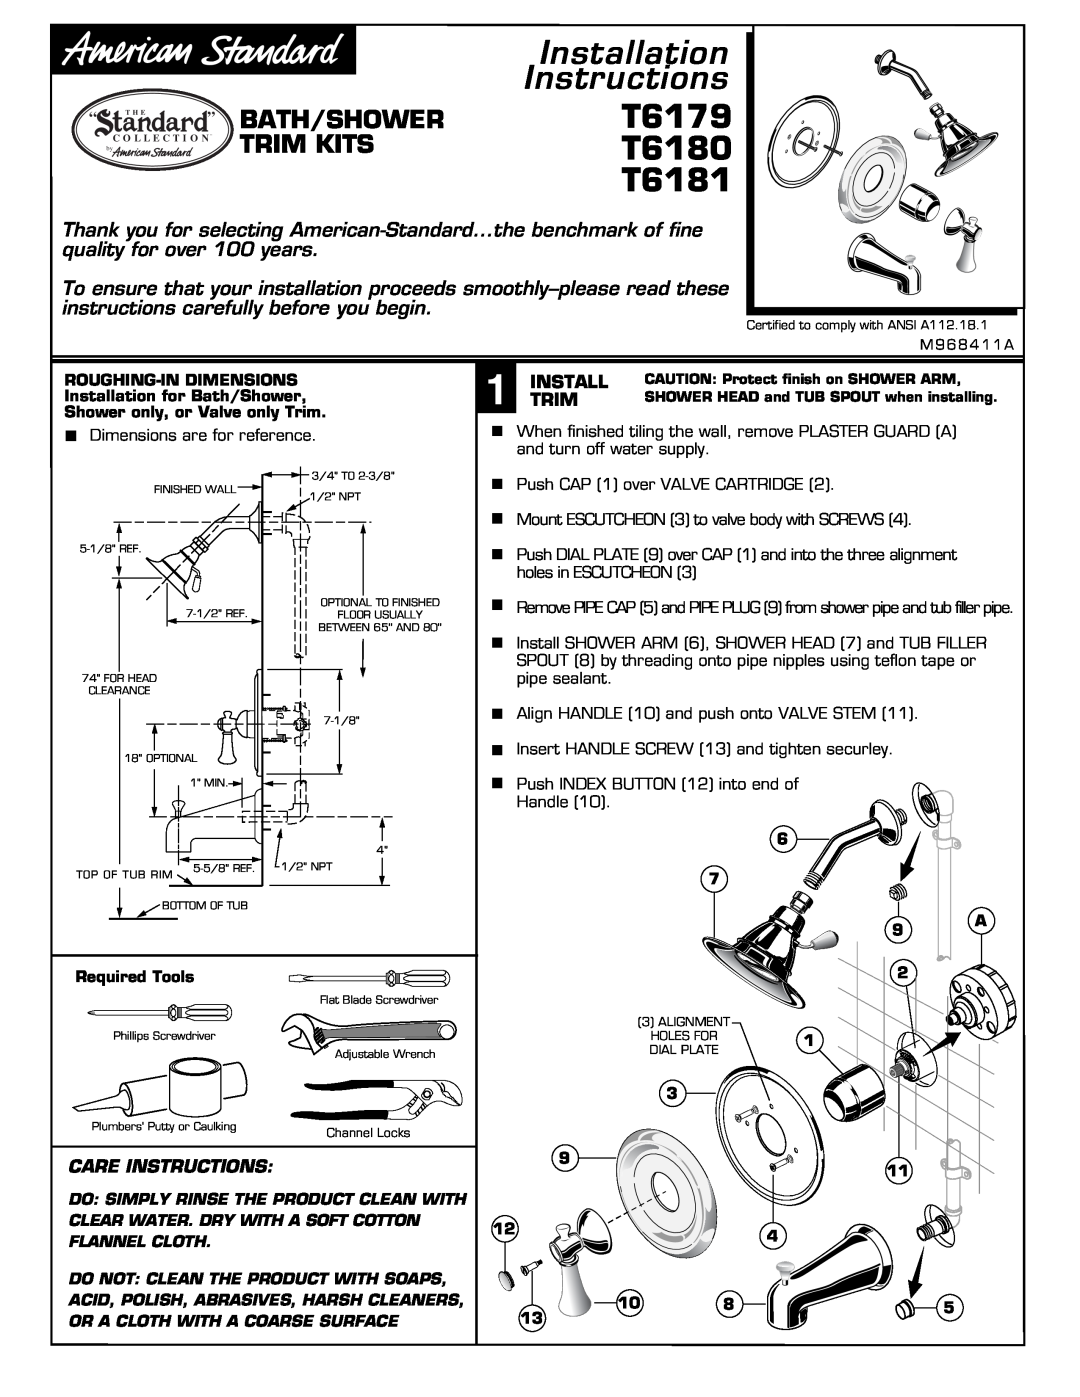 American Standard installation instructions T6179 T6180 T6181, Bath/Shower Trim Kits, Installation Instructions 